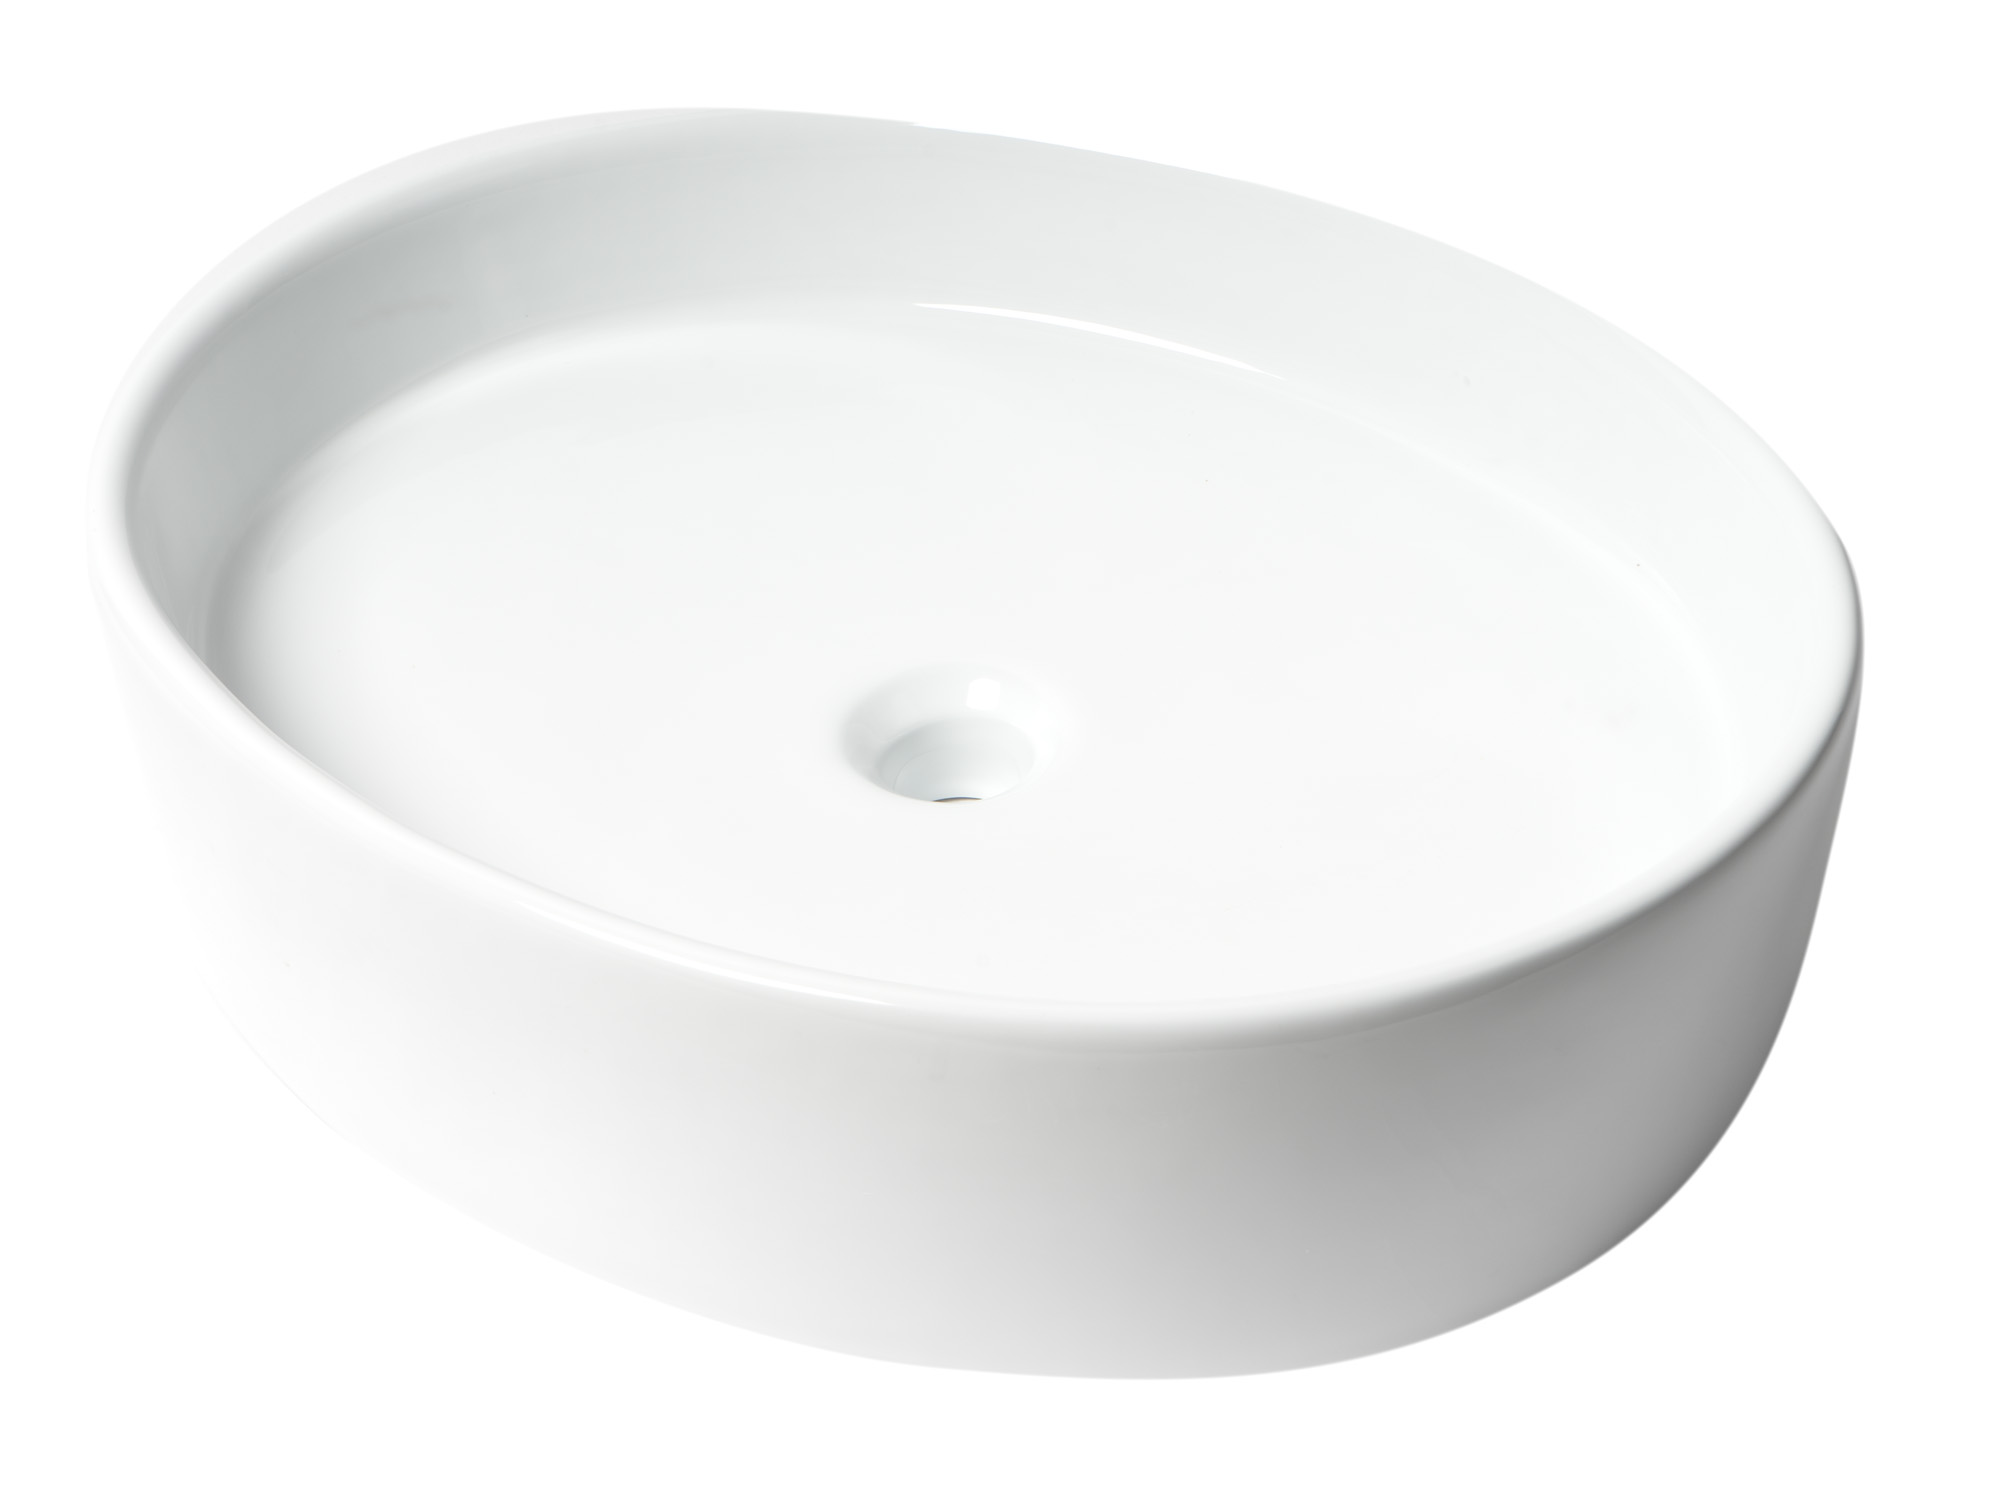 ALFI brand ABC911 White 22" Oval Above Mount Ceramic Sink